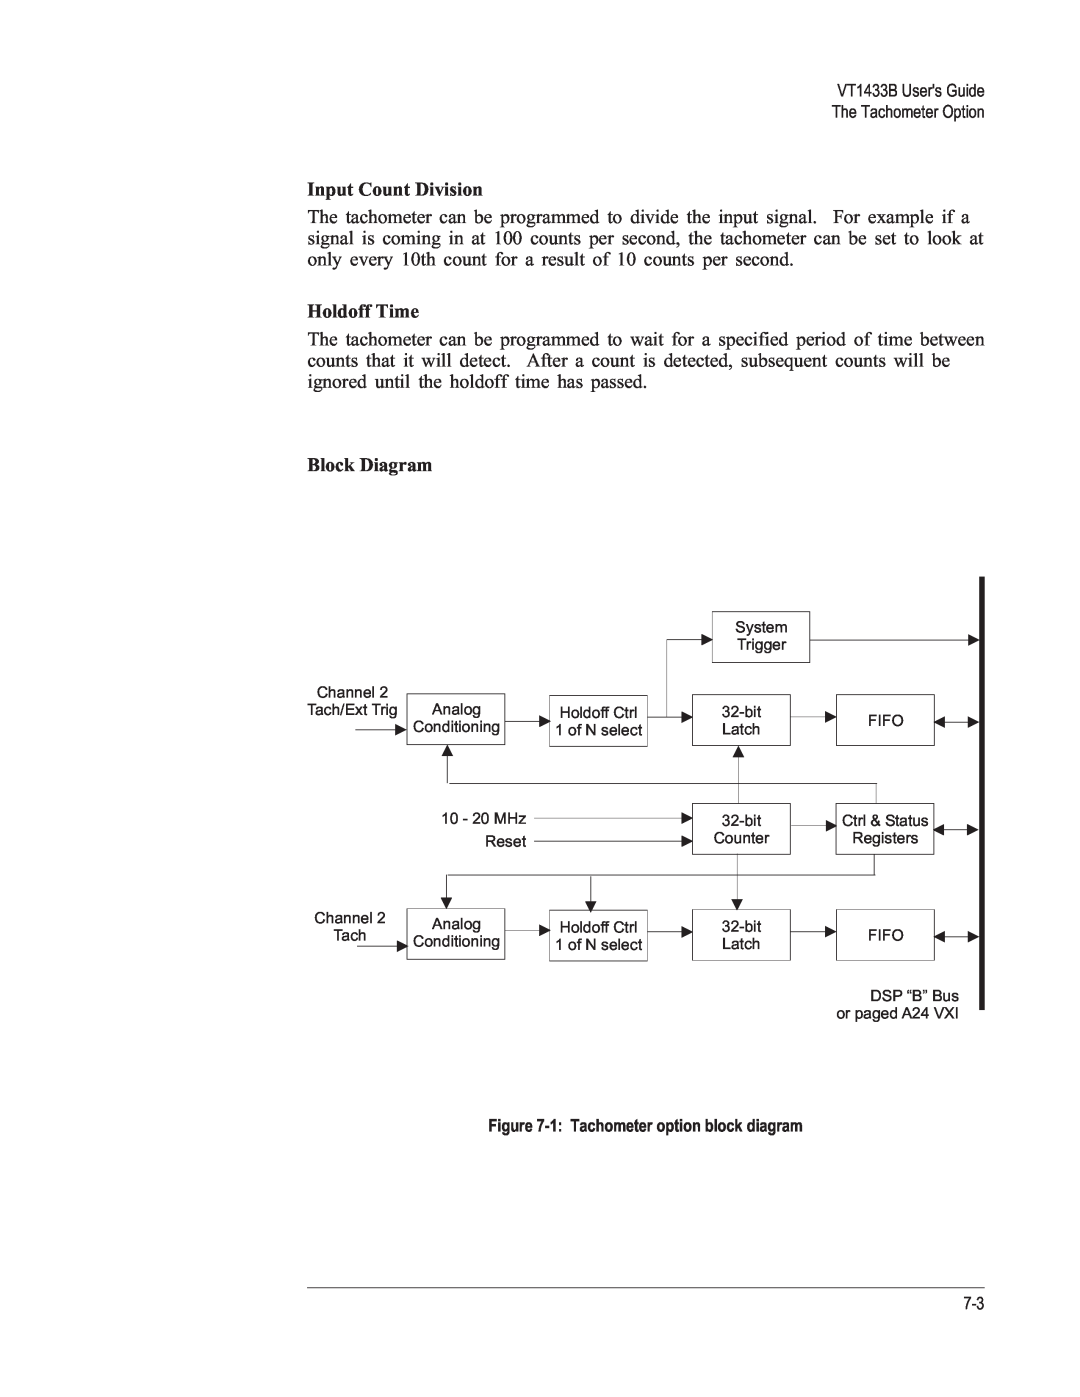 VXI VT1433B manual Input Count Division, Holdoff Time, Block Diagram, 1:Tachometer option block diagram 